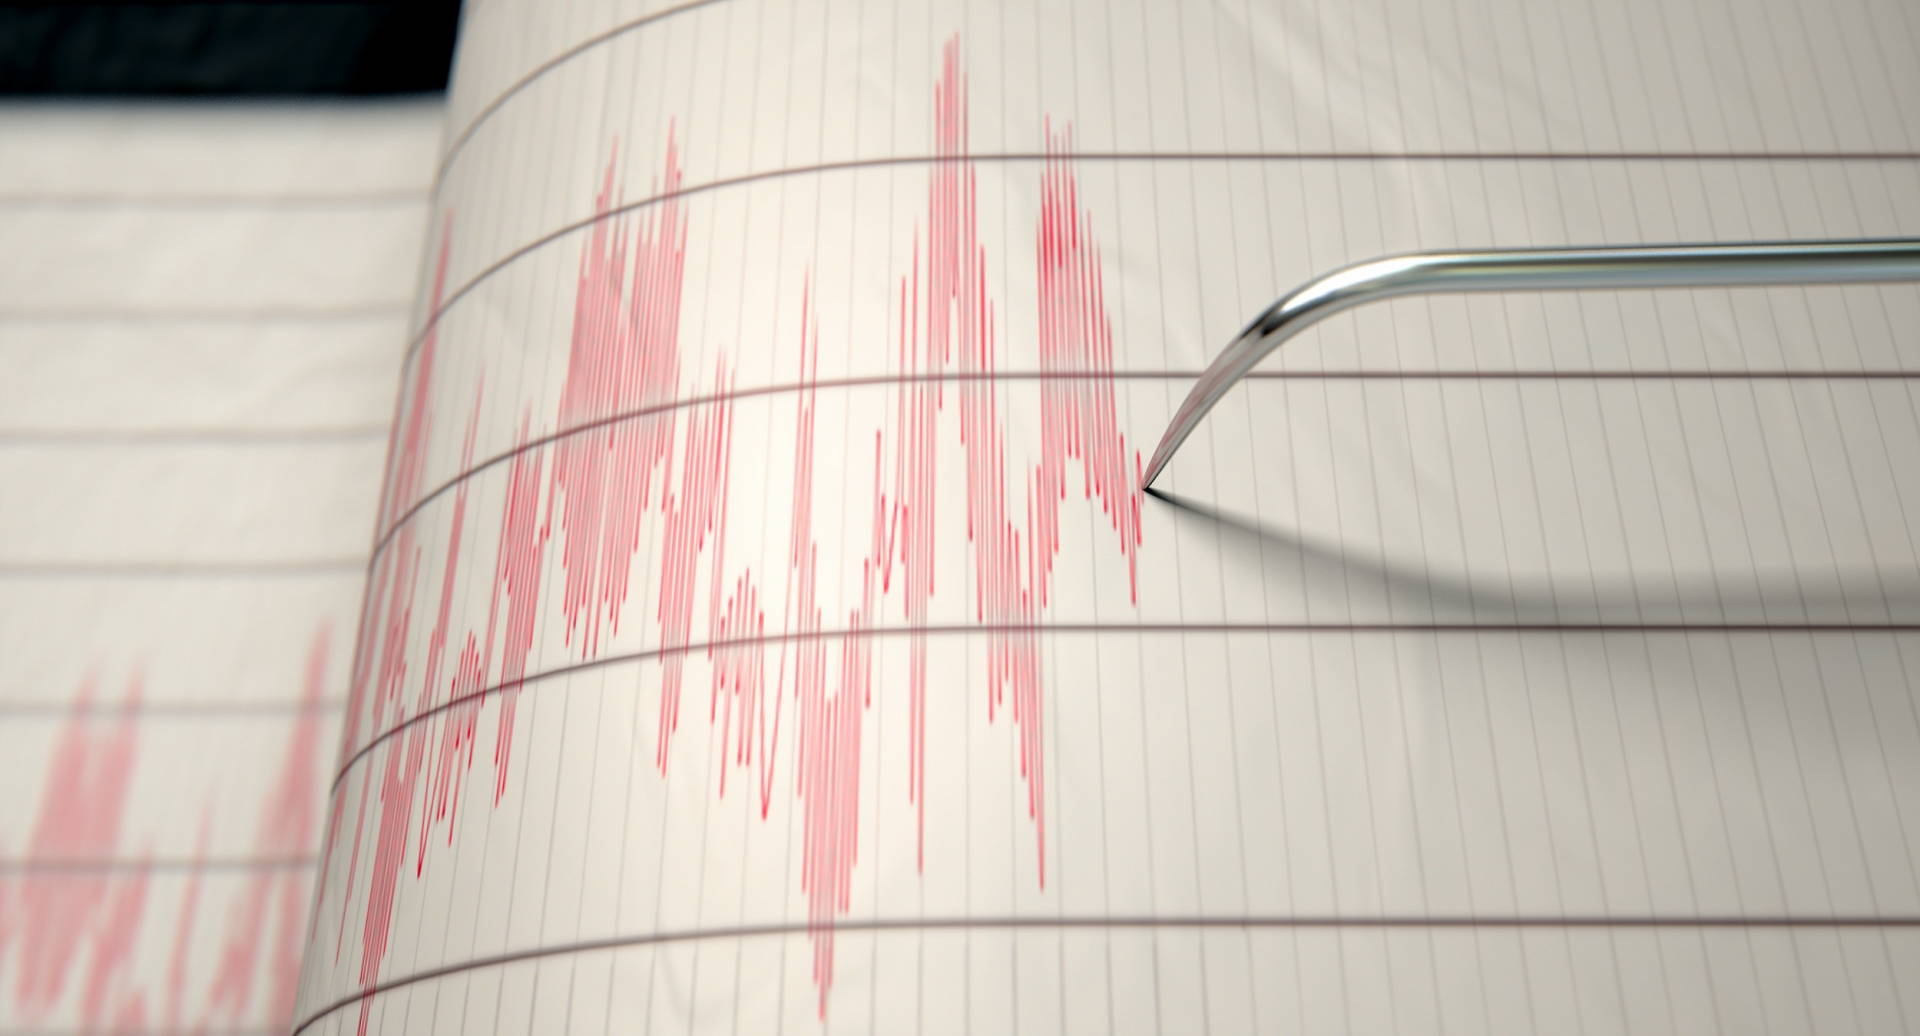 potres-zemljotres-seizmograf-shutterstock.jpg